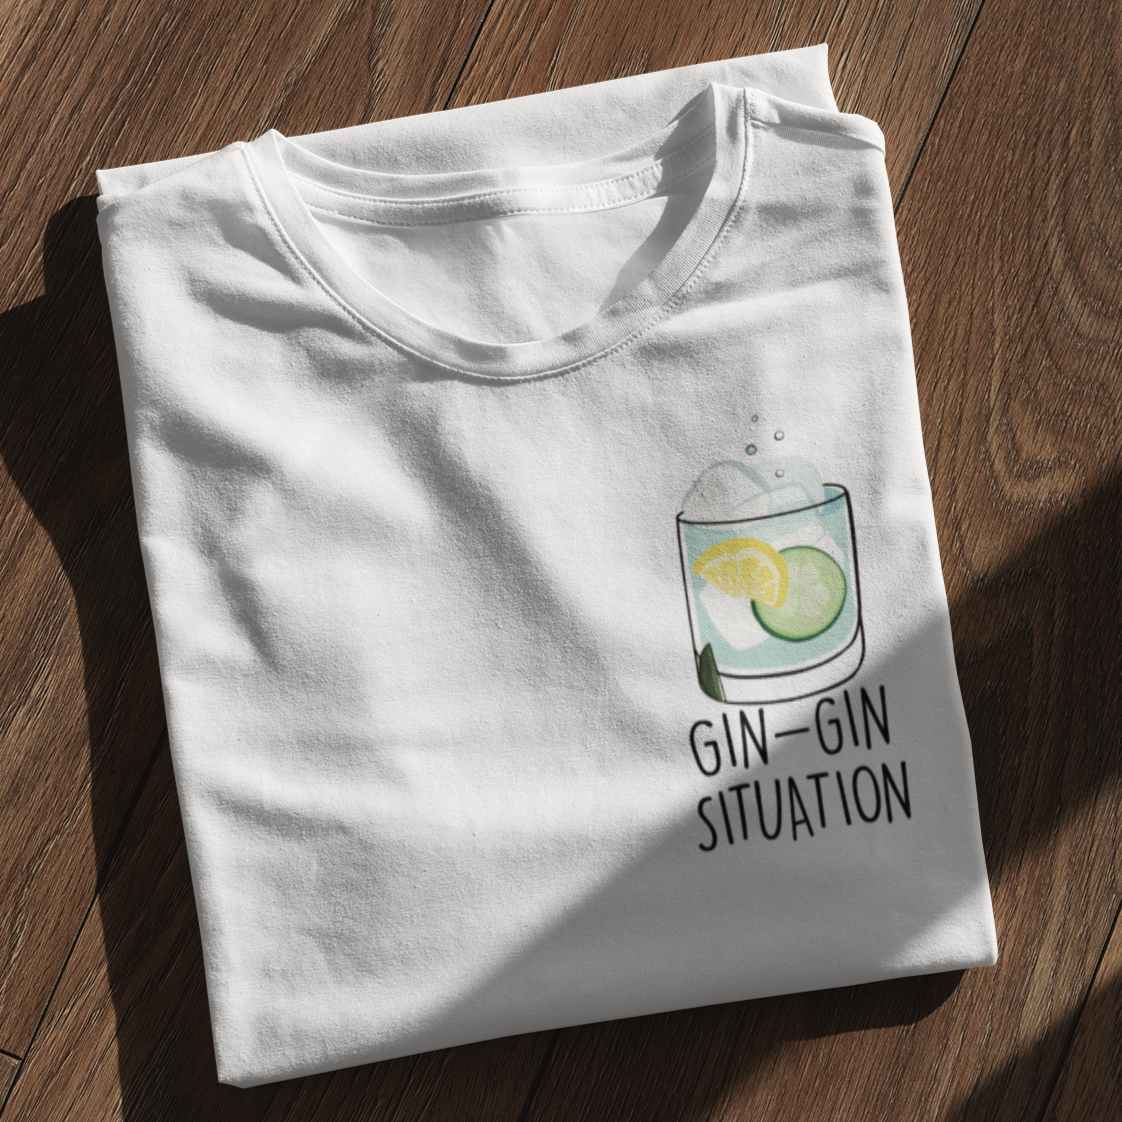 GIN GIN SITUATION - Premium Shirt Damen - Weinspirits